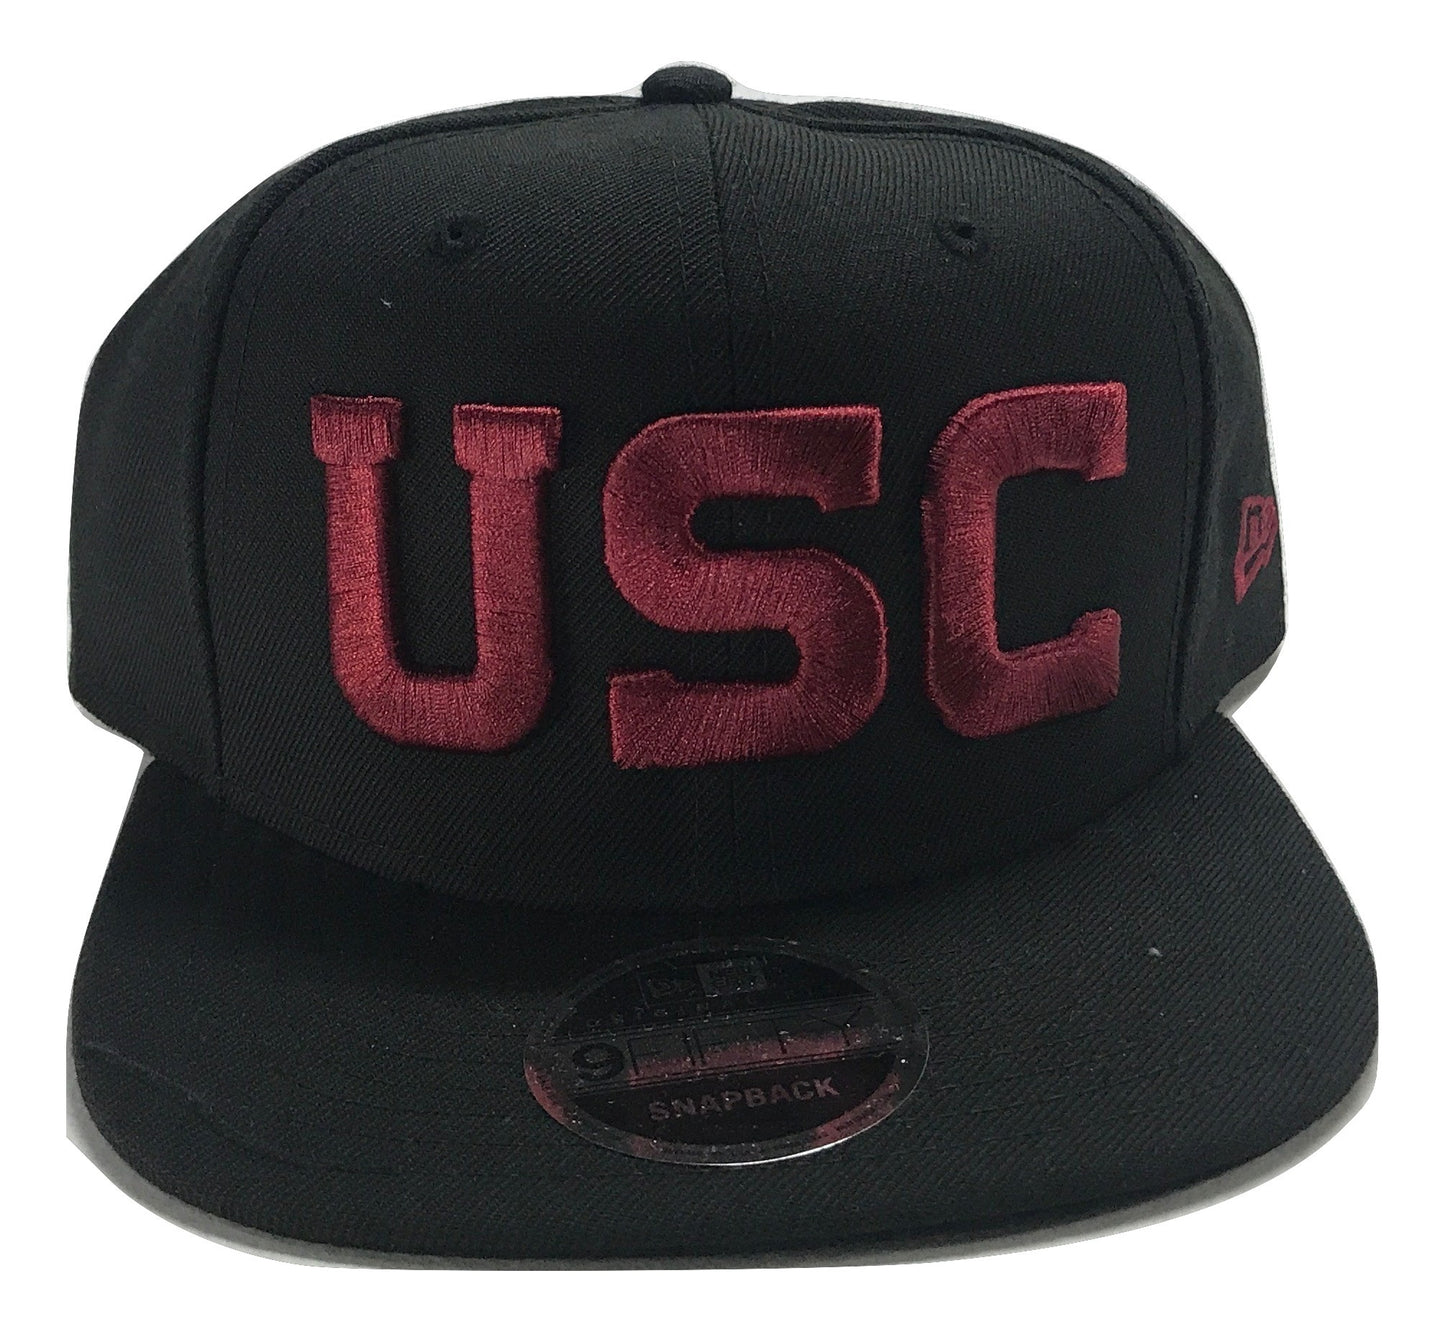 USC Trojans (Black) Snapback